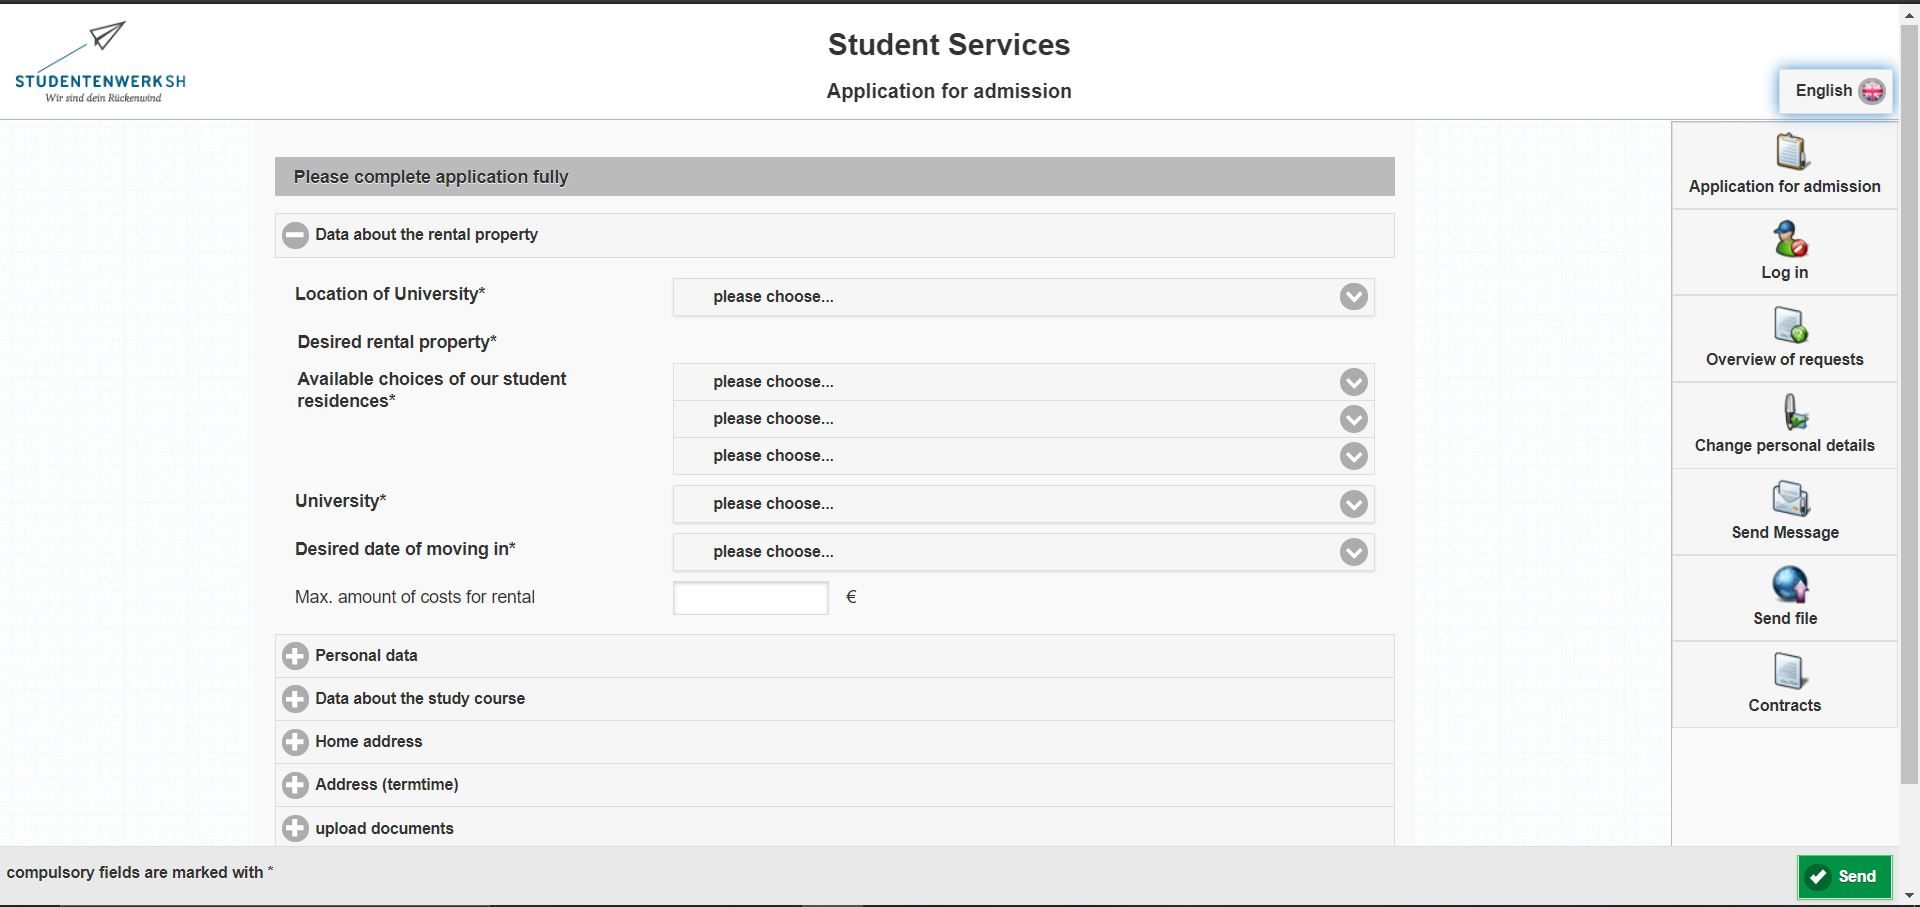 Studentenwerk application system